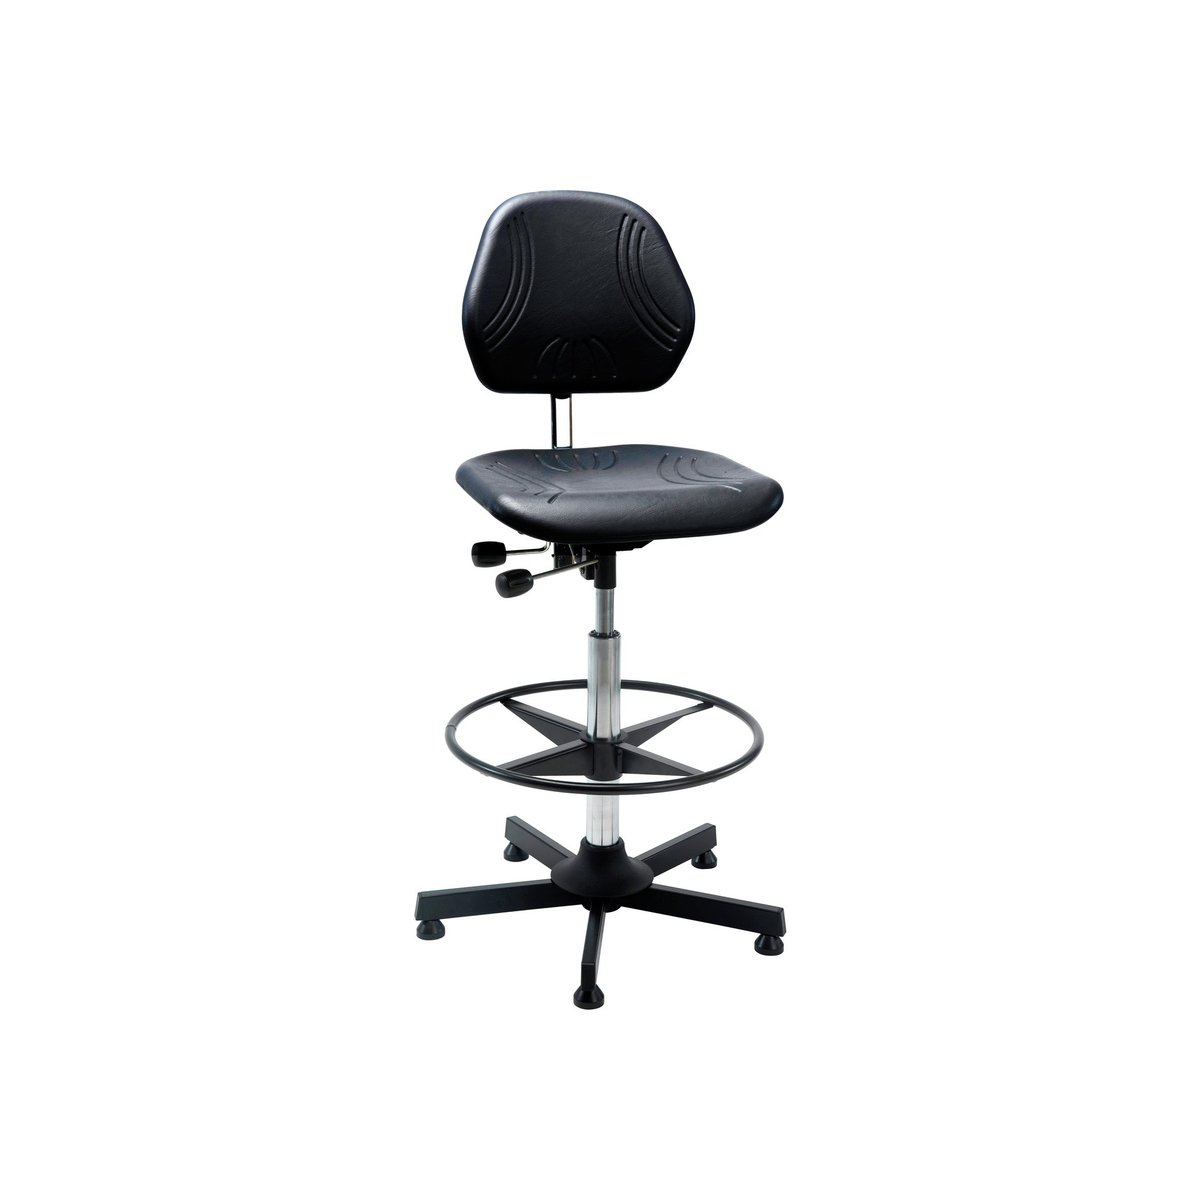 88601009 - Industrial chair